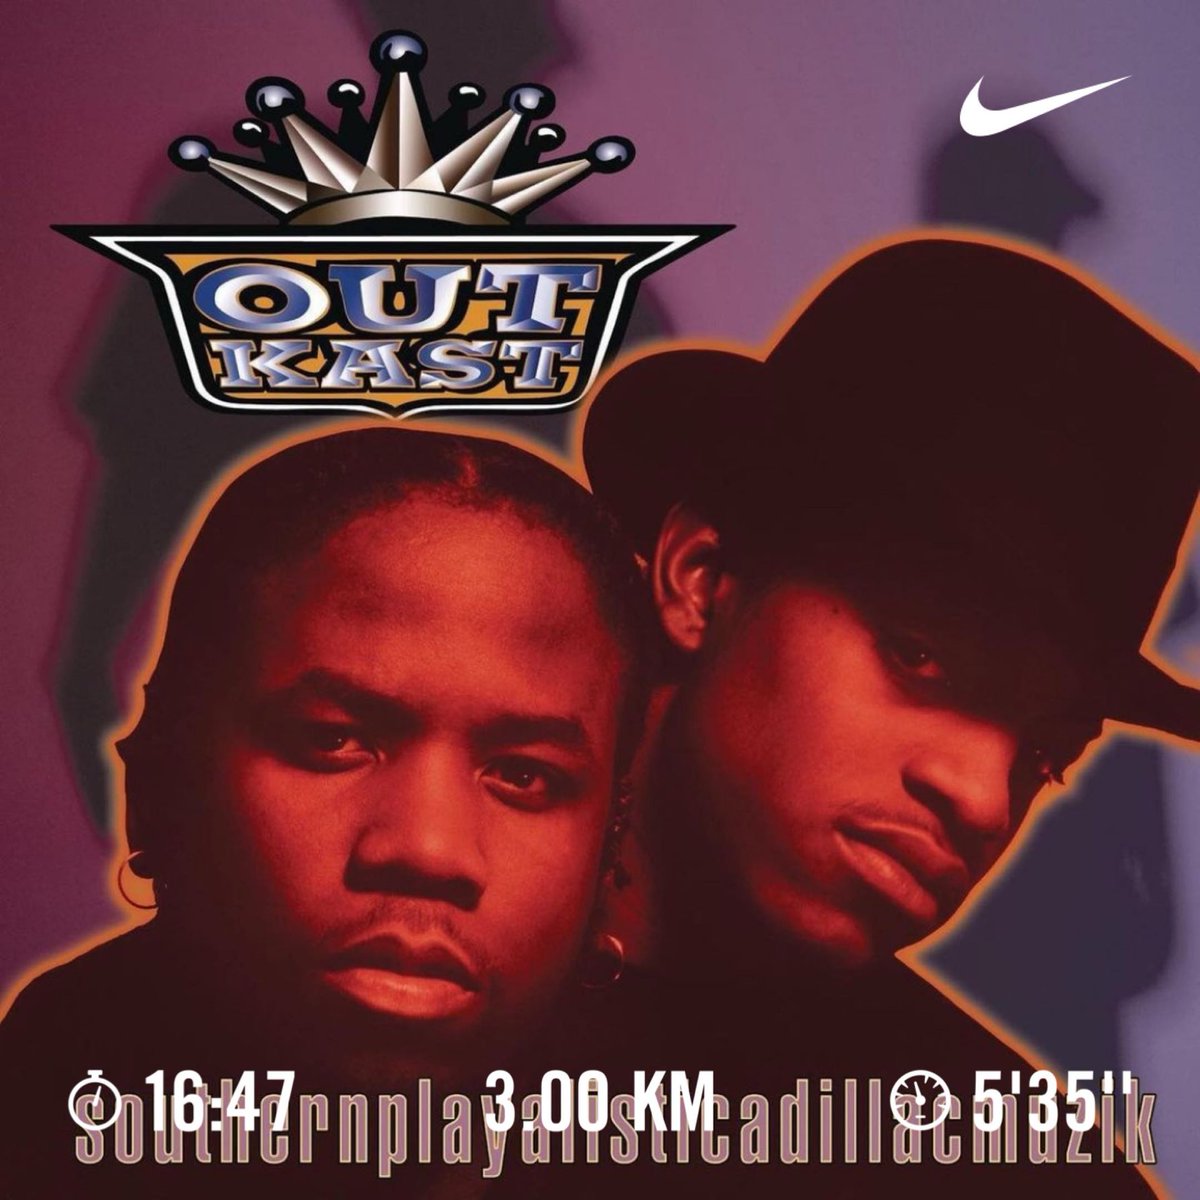 SOUTHERNPLAYALISTICADILLACMUZIK // Outkast // 26 • 04 • 1994

#Southernplayalisticadillacmuzik #Outkast #Rap #SouthernRap #Running #JustDoIt #NikeRunning #NRC #ComeRunWithUs #RunWithMusic #AlbumOfTheDay #30Anniversary